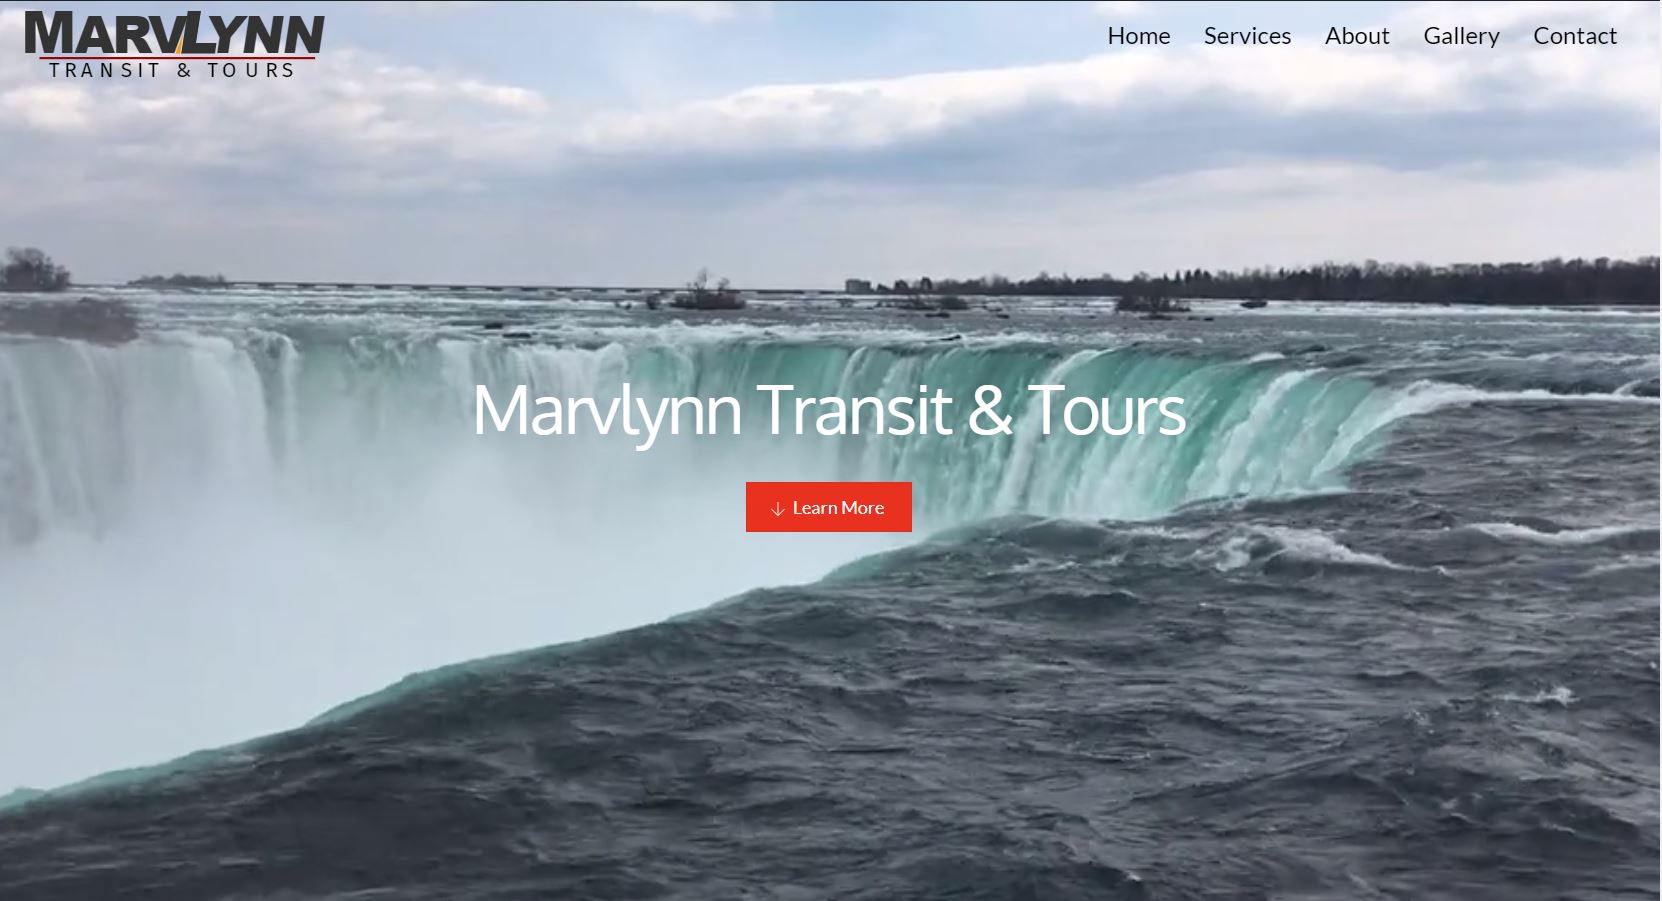 Marvlynn Transit & Tours